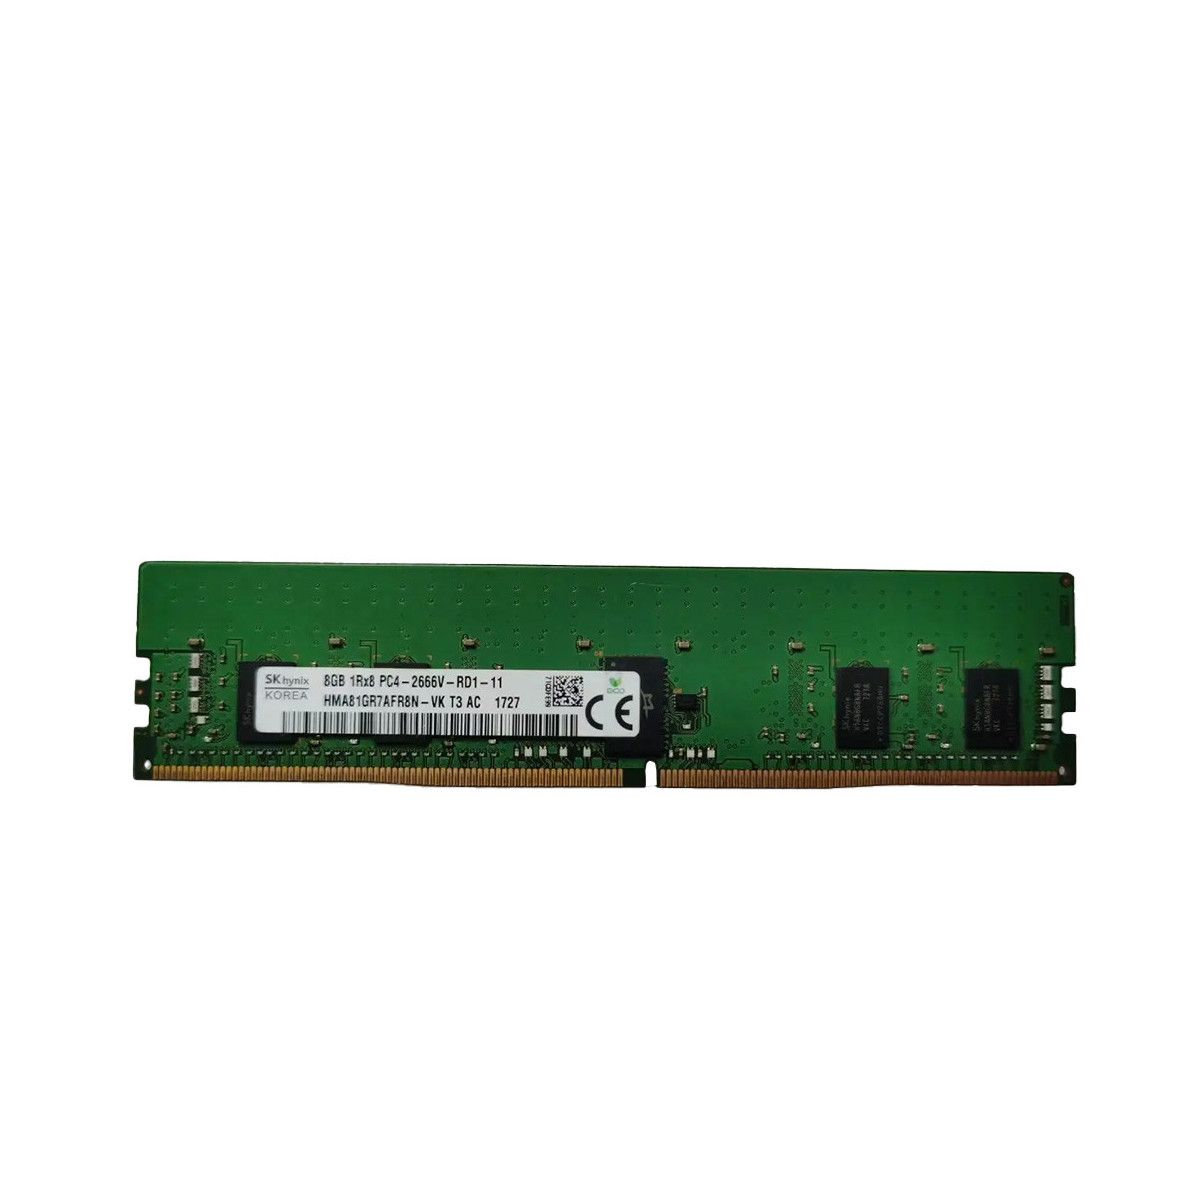 T9V39AA-MS - Mem-star 1x 8GB DDR4-2400 RDIMM PC4-19200T-R - Memstar Memorie OEM compatibilă 1 - Memstar 